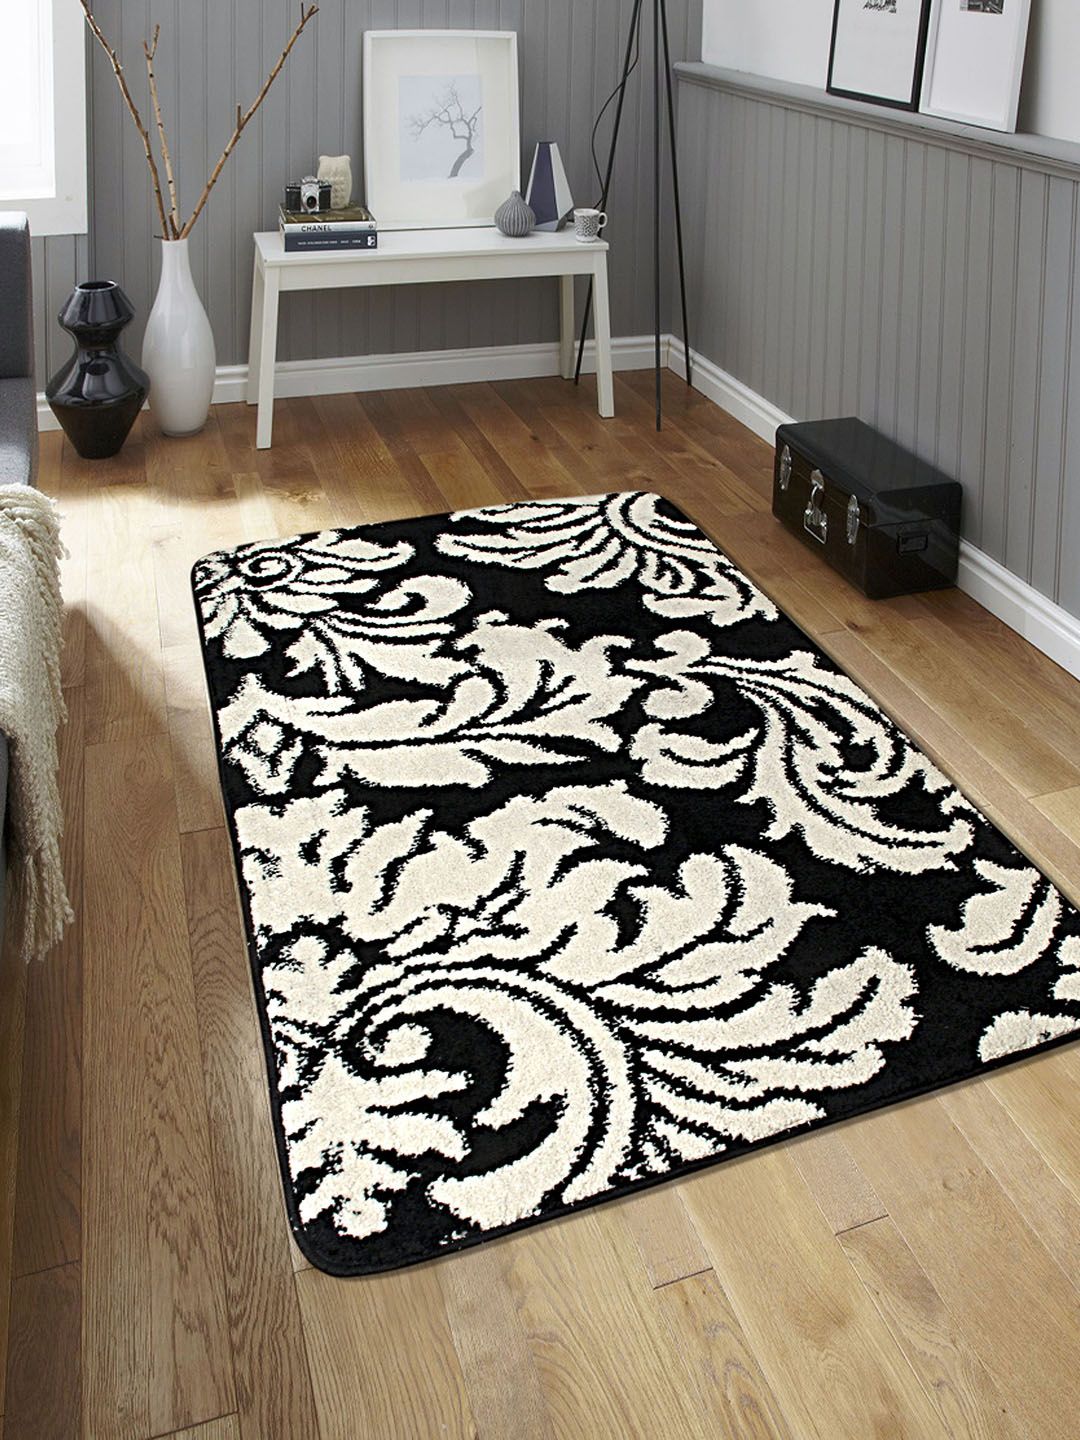 Saral Home Black & White Printed Microfiber Tufted Anti-Skid Carpet Price in India